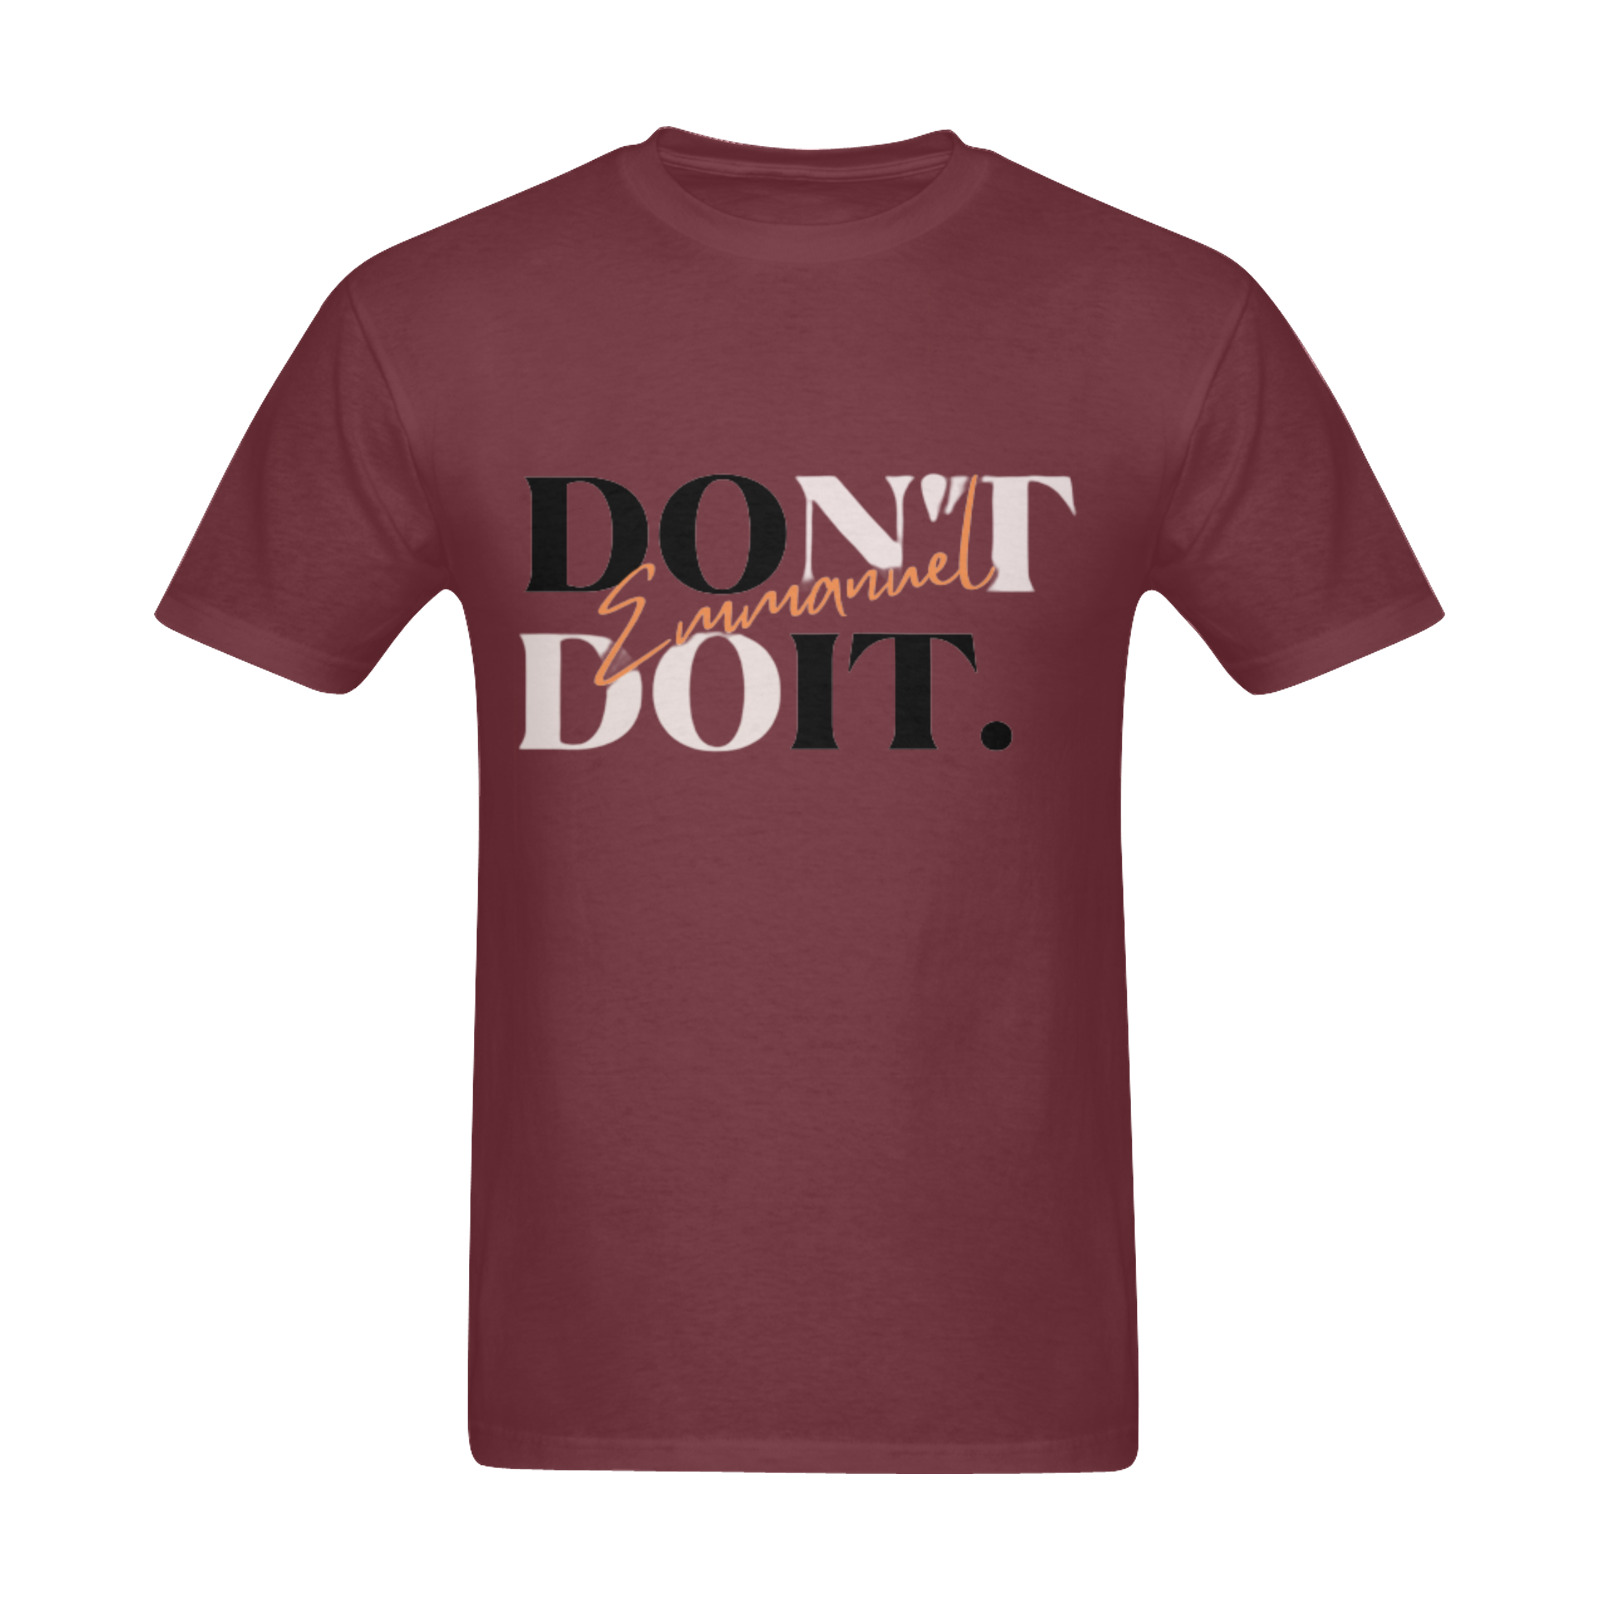 EMMANUEL DON'T DO IT! SUNNY MEN'S T-SHIRT BROWN Sunny Men's T- shirt (Model T06)